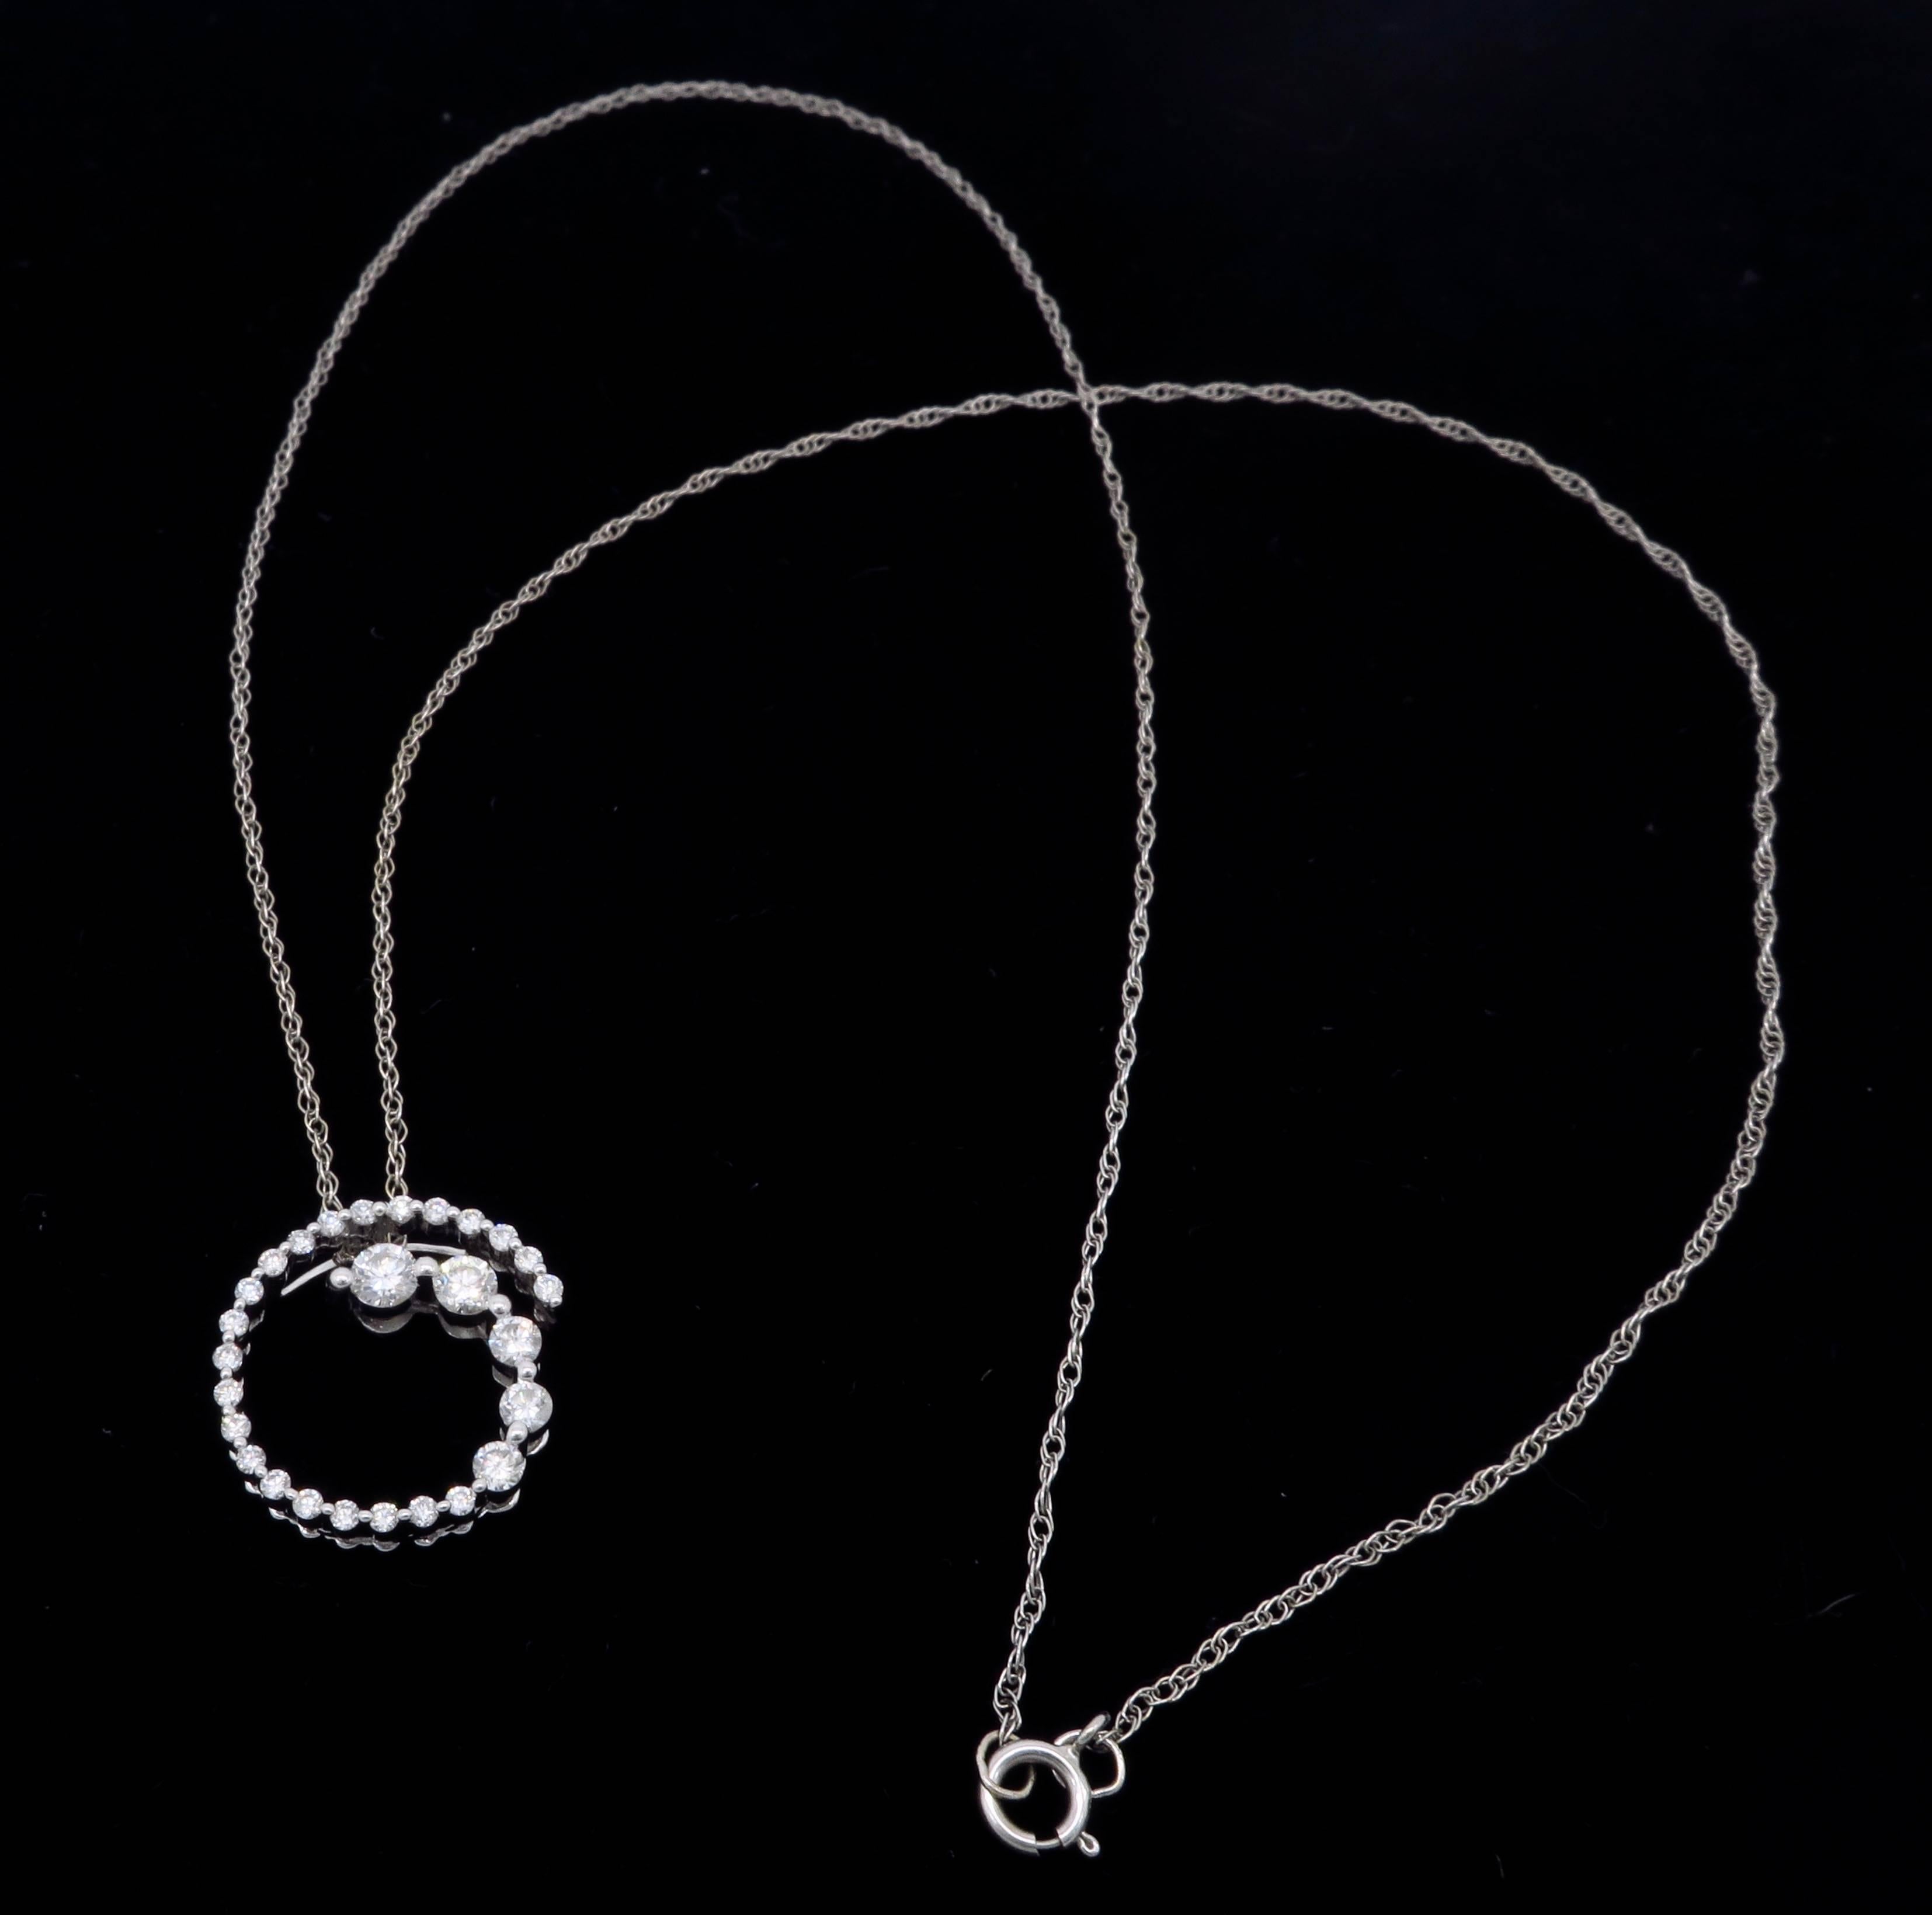  Diamond White Gold Pendant Chain Necklace  1